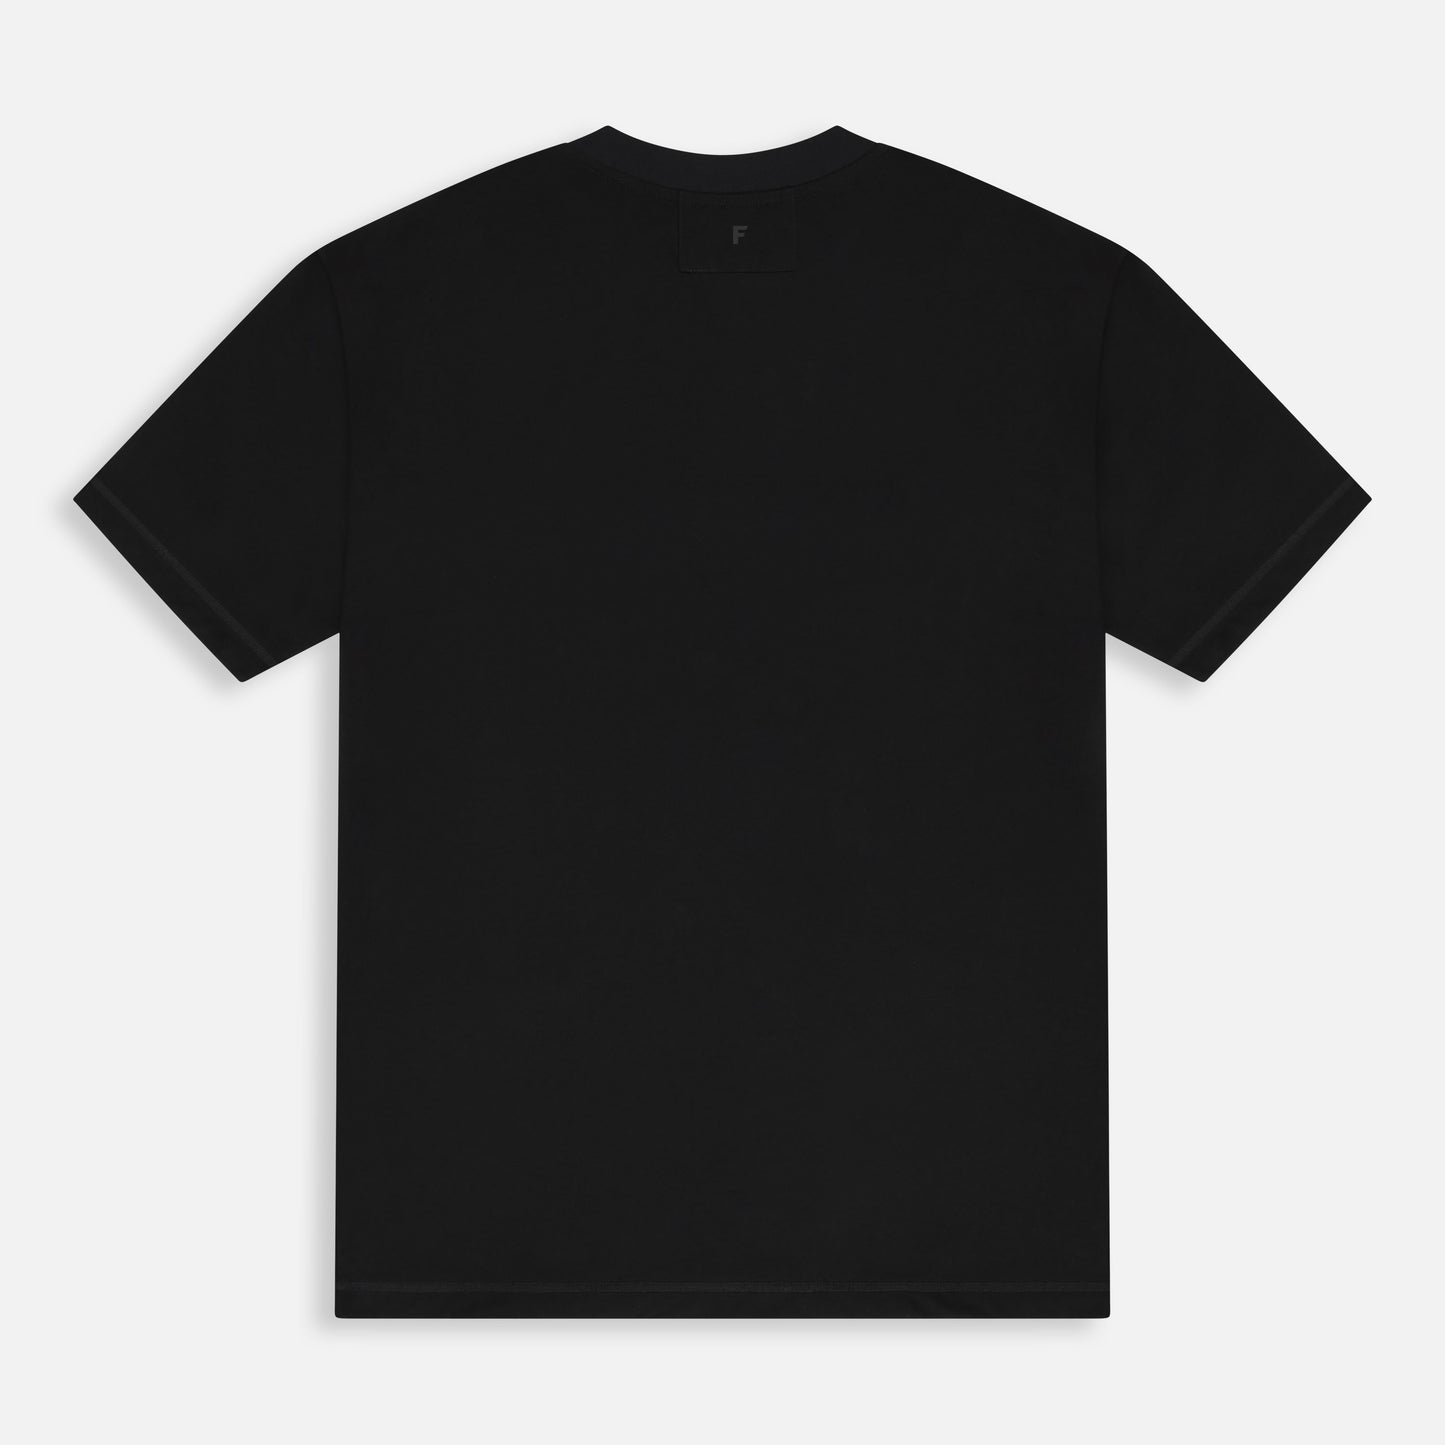 FUNDAMENTAL OVERSIZED BLACK ON BLACK SMALL LOGO T-SHIRT – BLACK